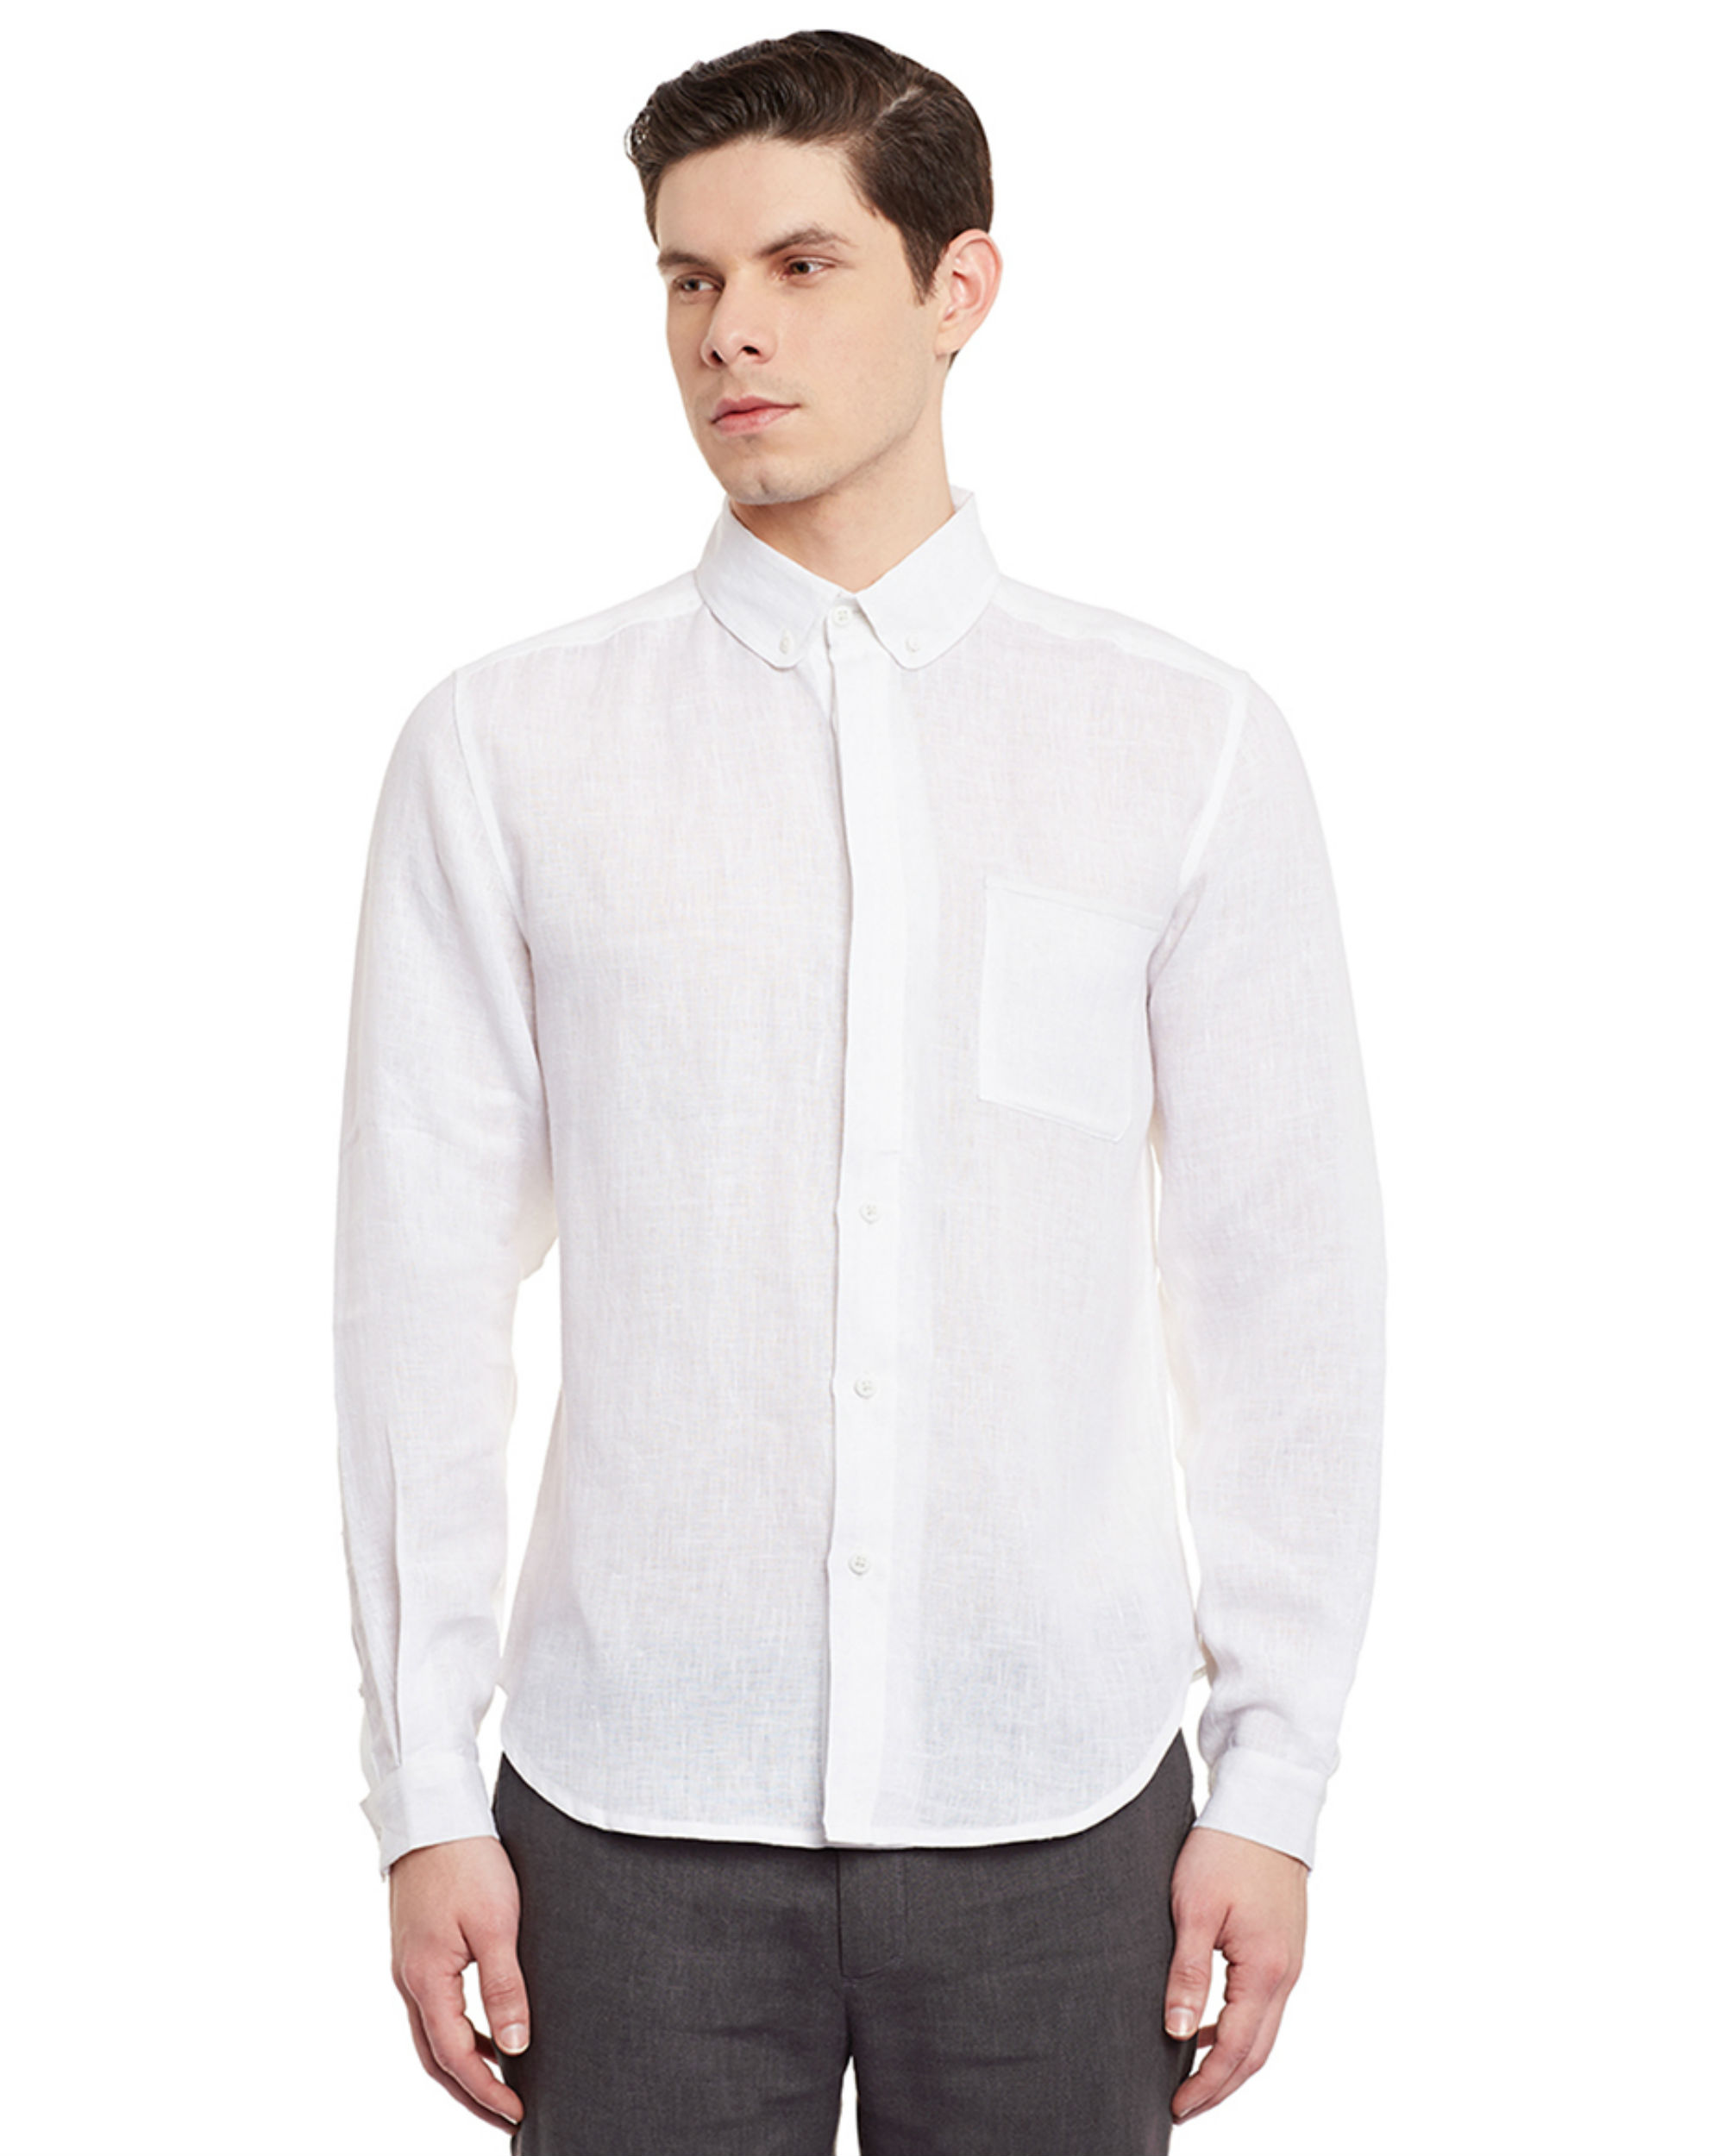 White linen button-down shirt by Dhatu Design Studio | The Secret Label